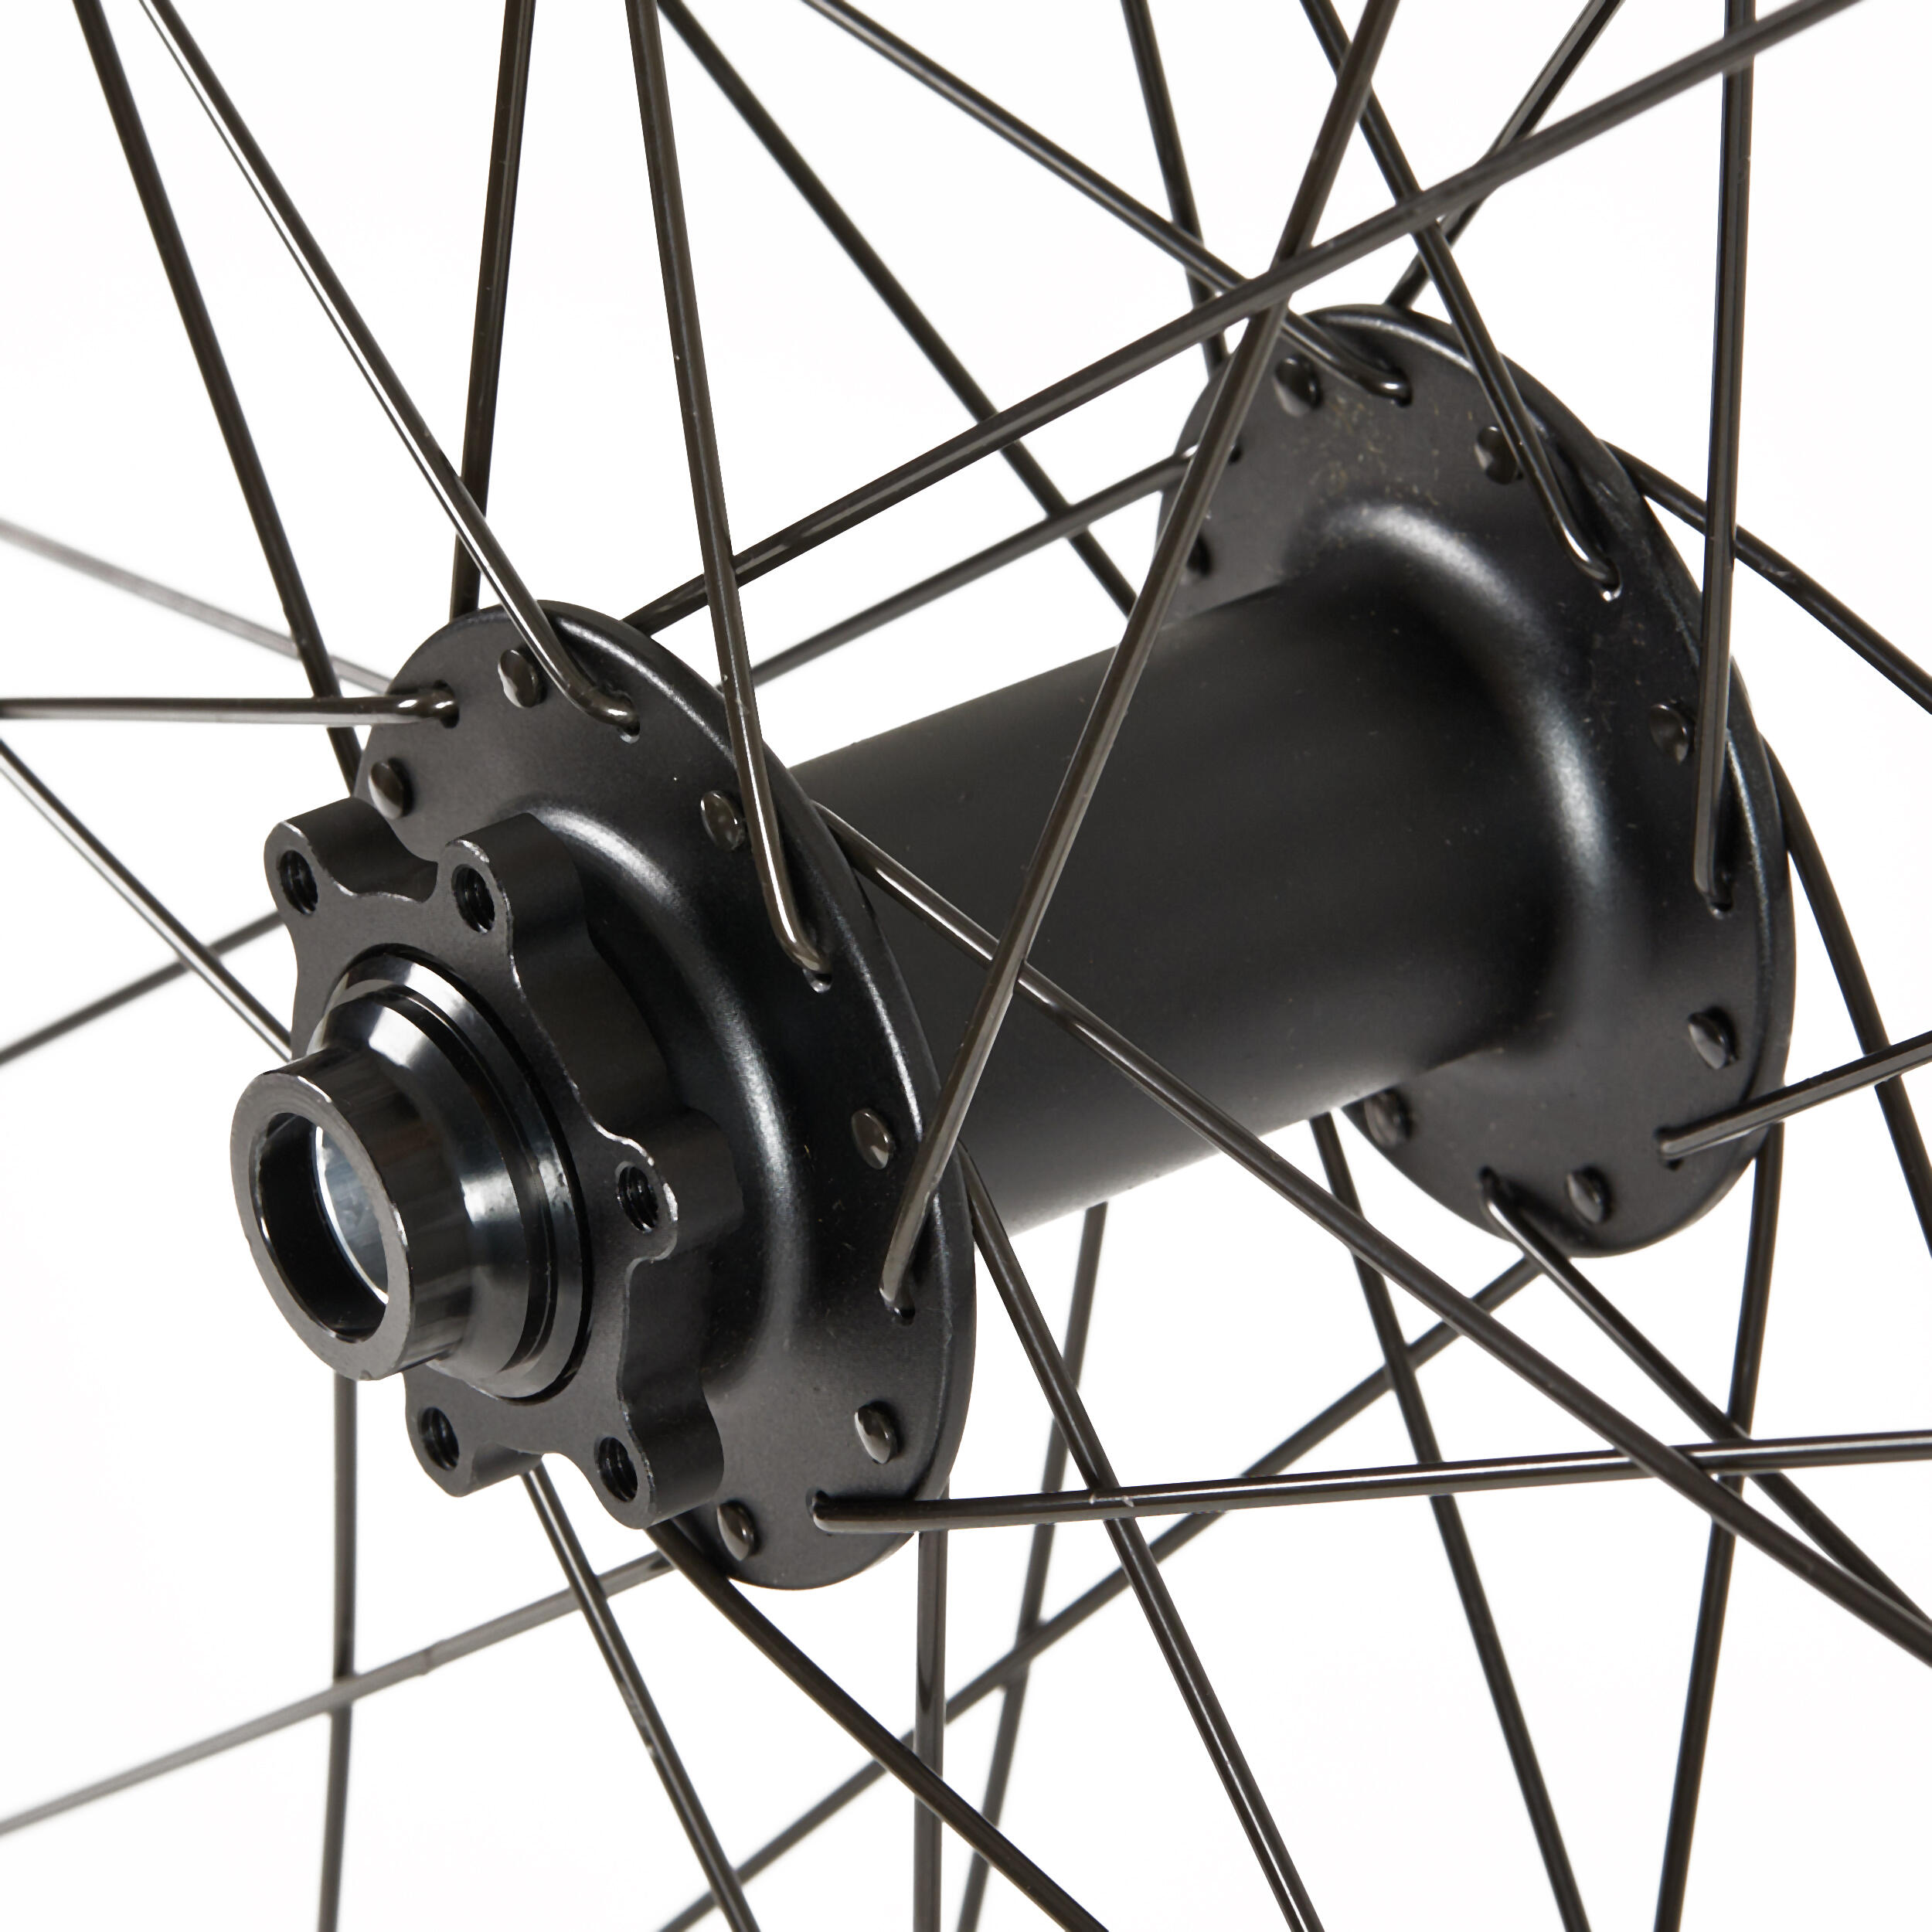 27.5" Double-Walled 15x110 Boost Disc Mountain Bike Front Wheel 2/3